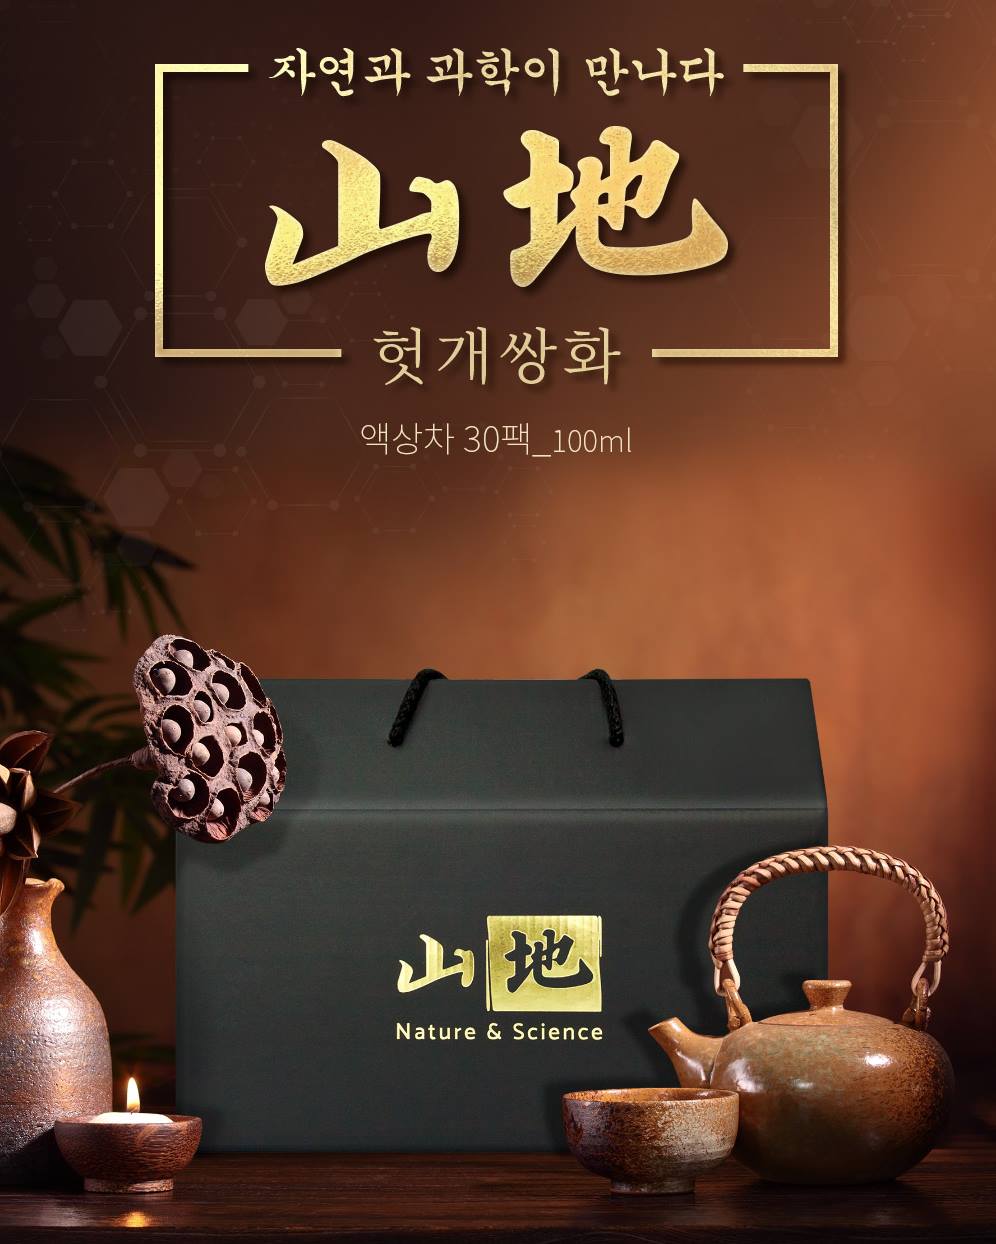 Korea Herb Tonic Tea Ssanghwa cha Traditional Korean Beverage Health